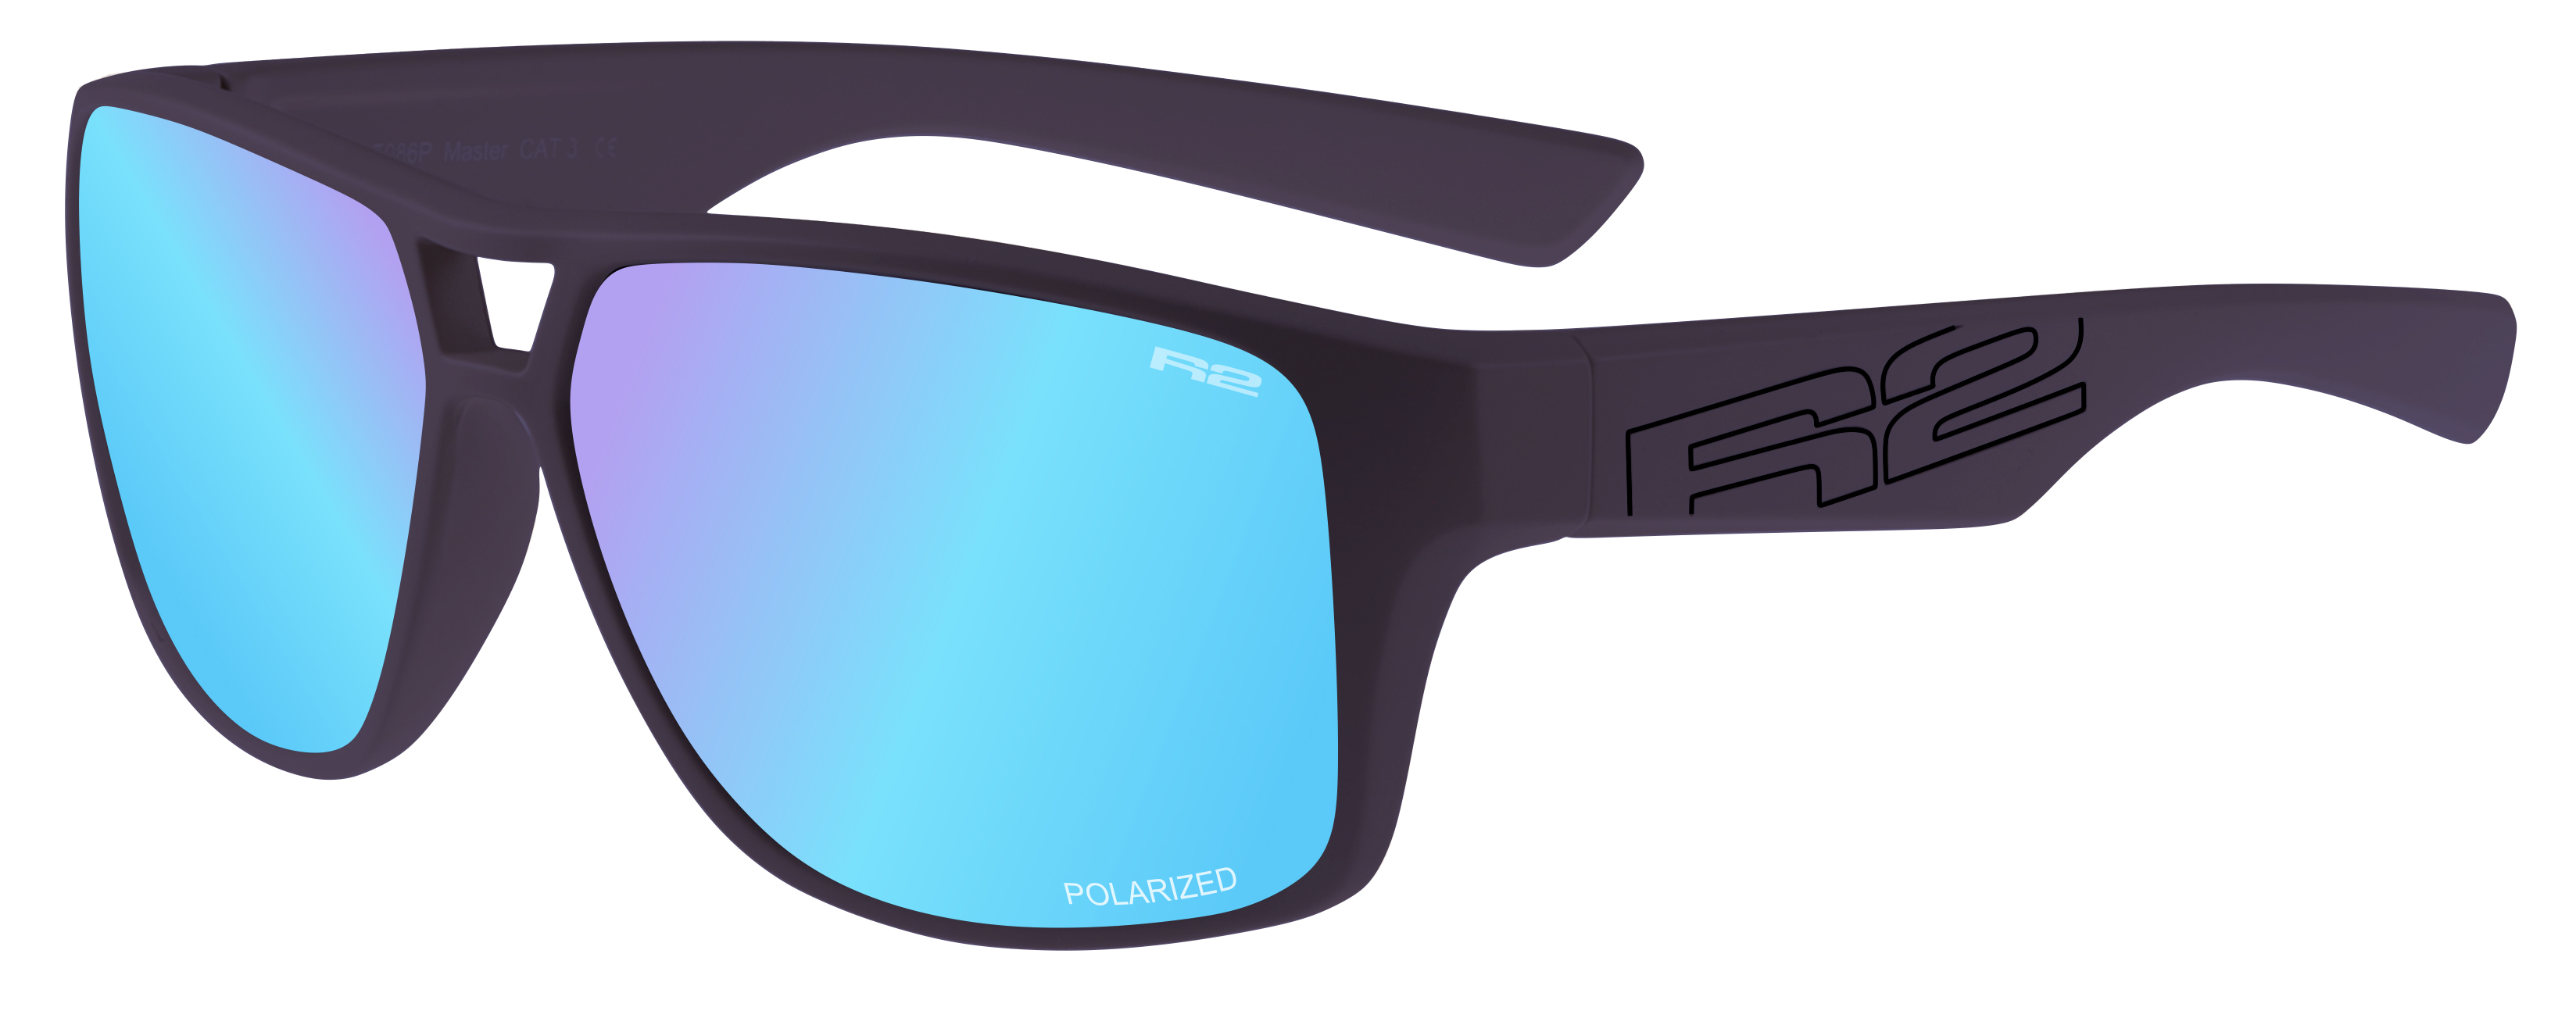 Sport sunglasses R2 MASTER AT086T